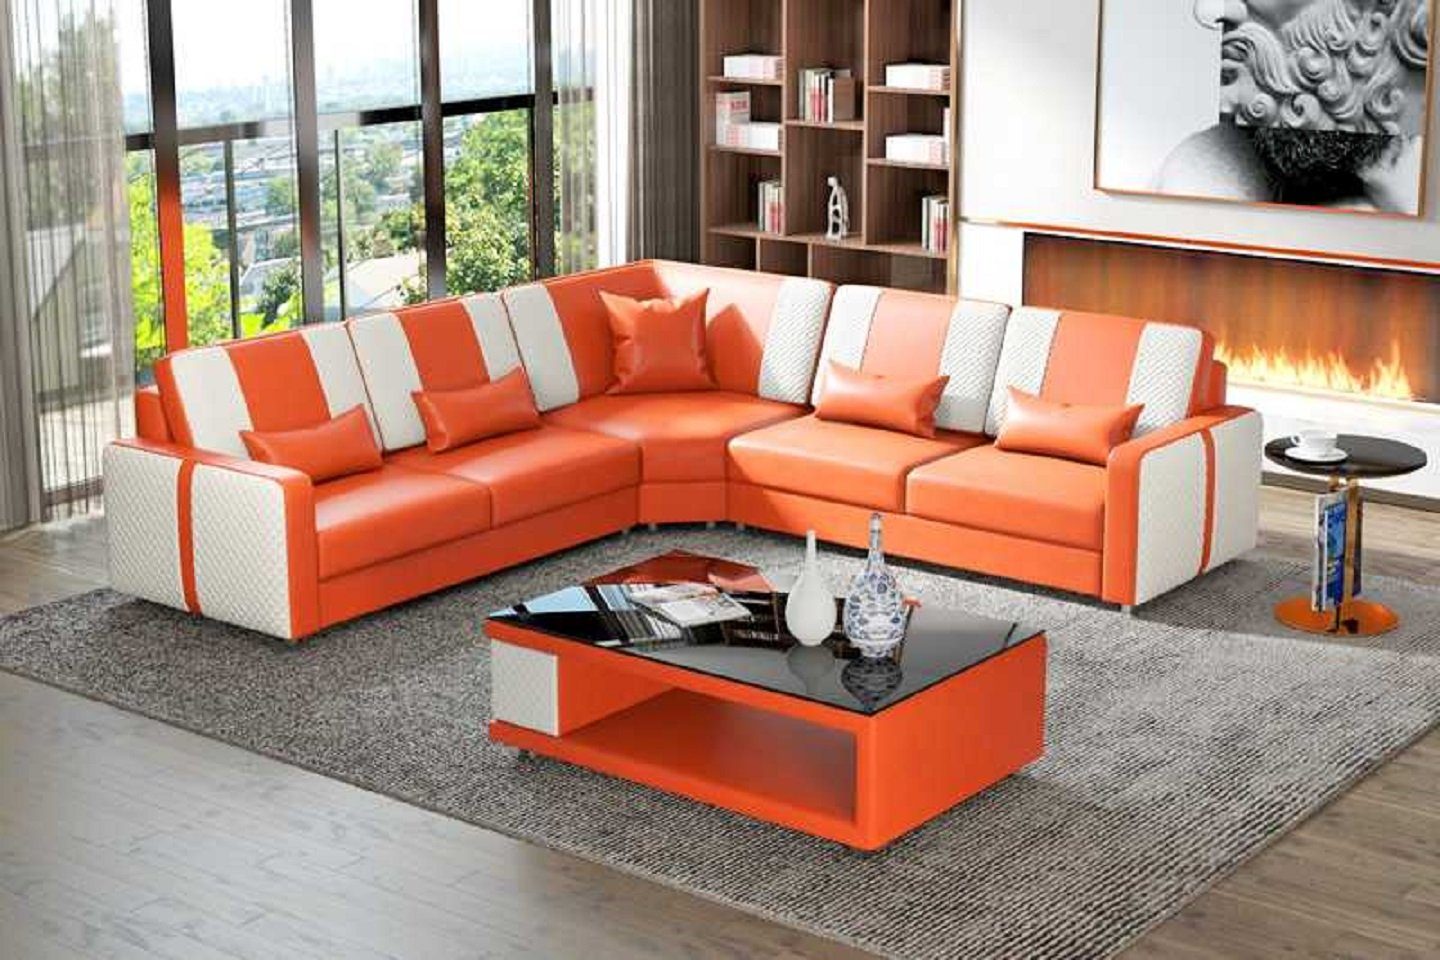 JVmoebel Ecksofa Design in Made Modern Orange Couch Europe Form Teile, Eckcouch, Ecksofa Sofa Eckgarnitur L 3